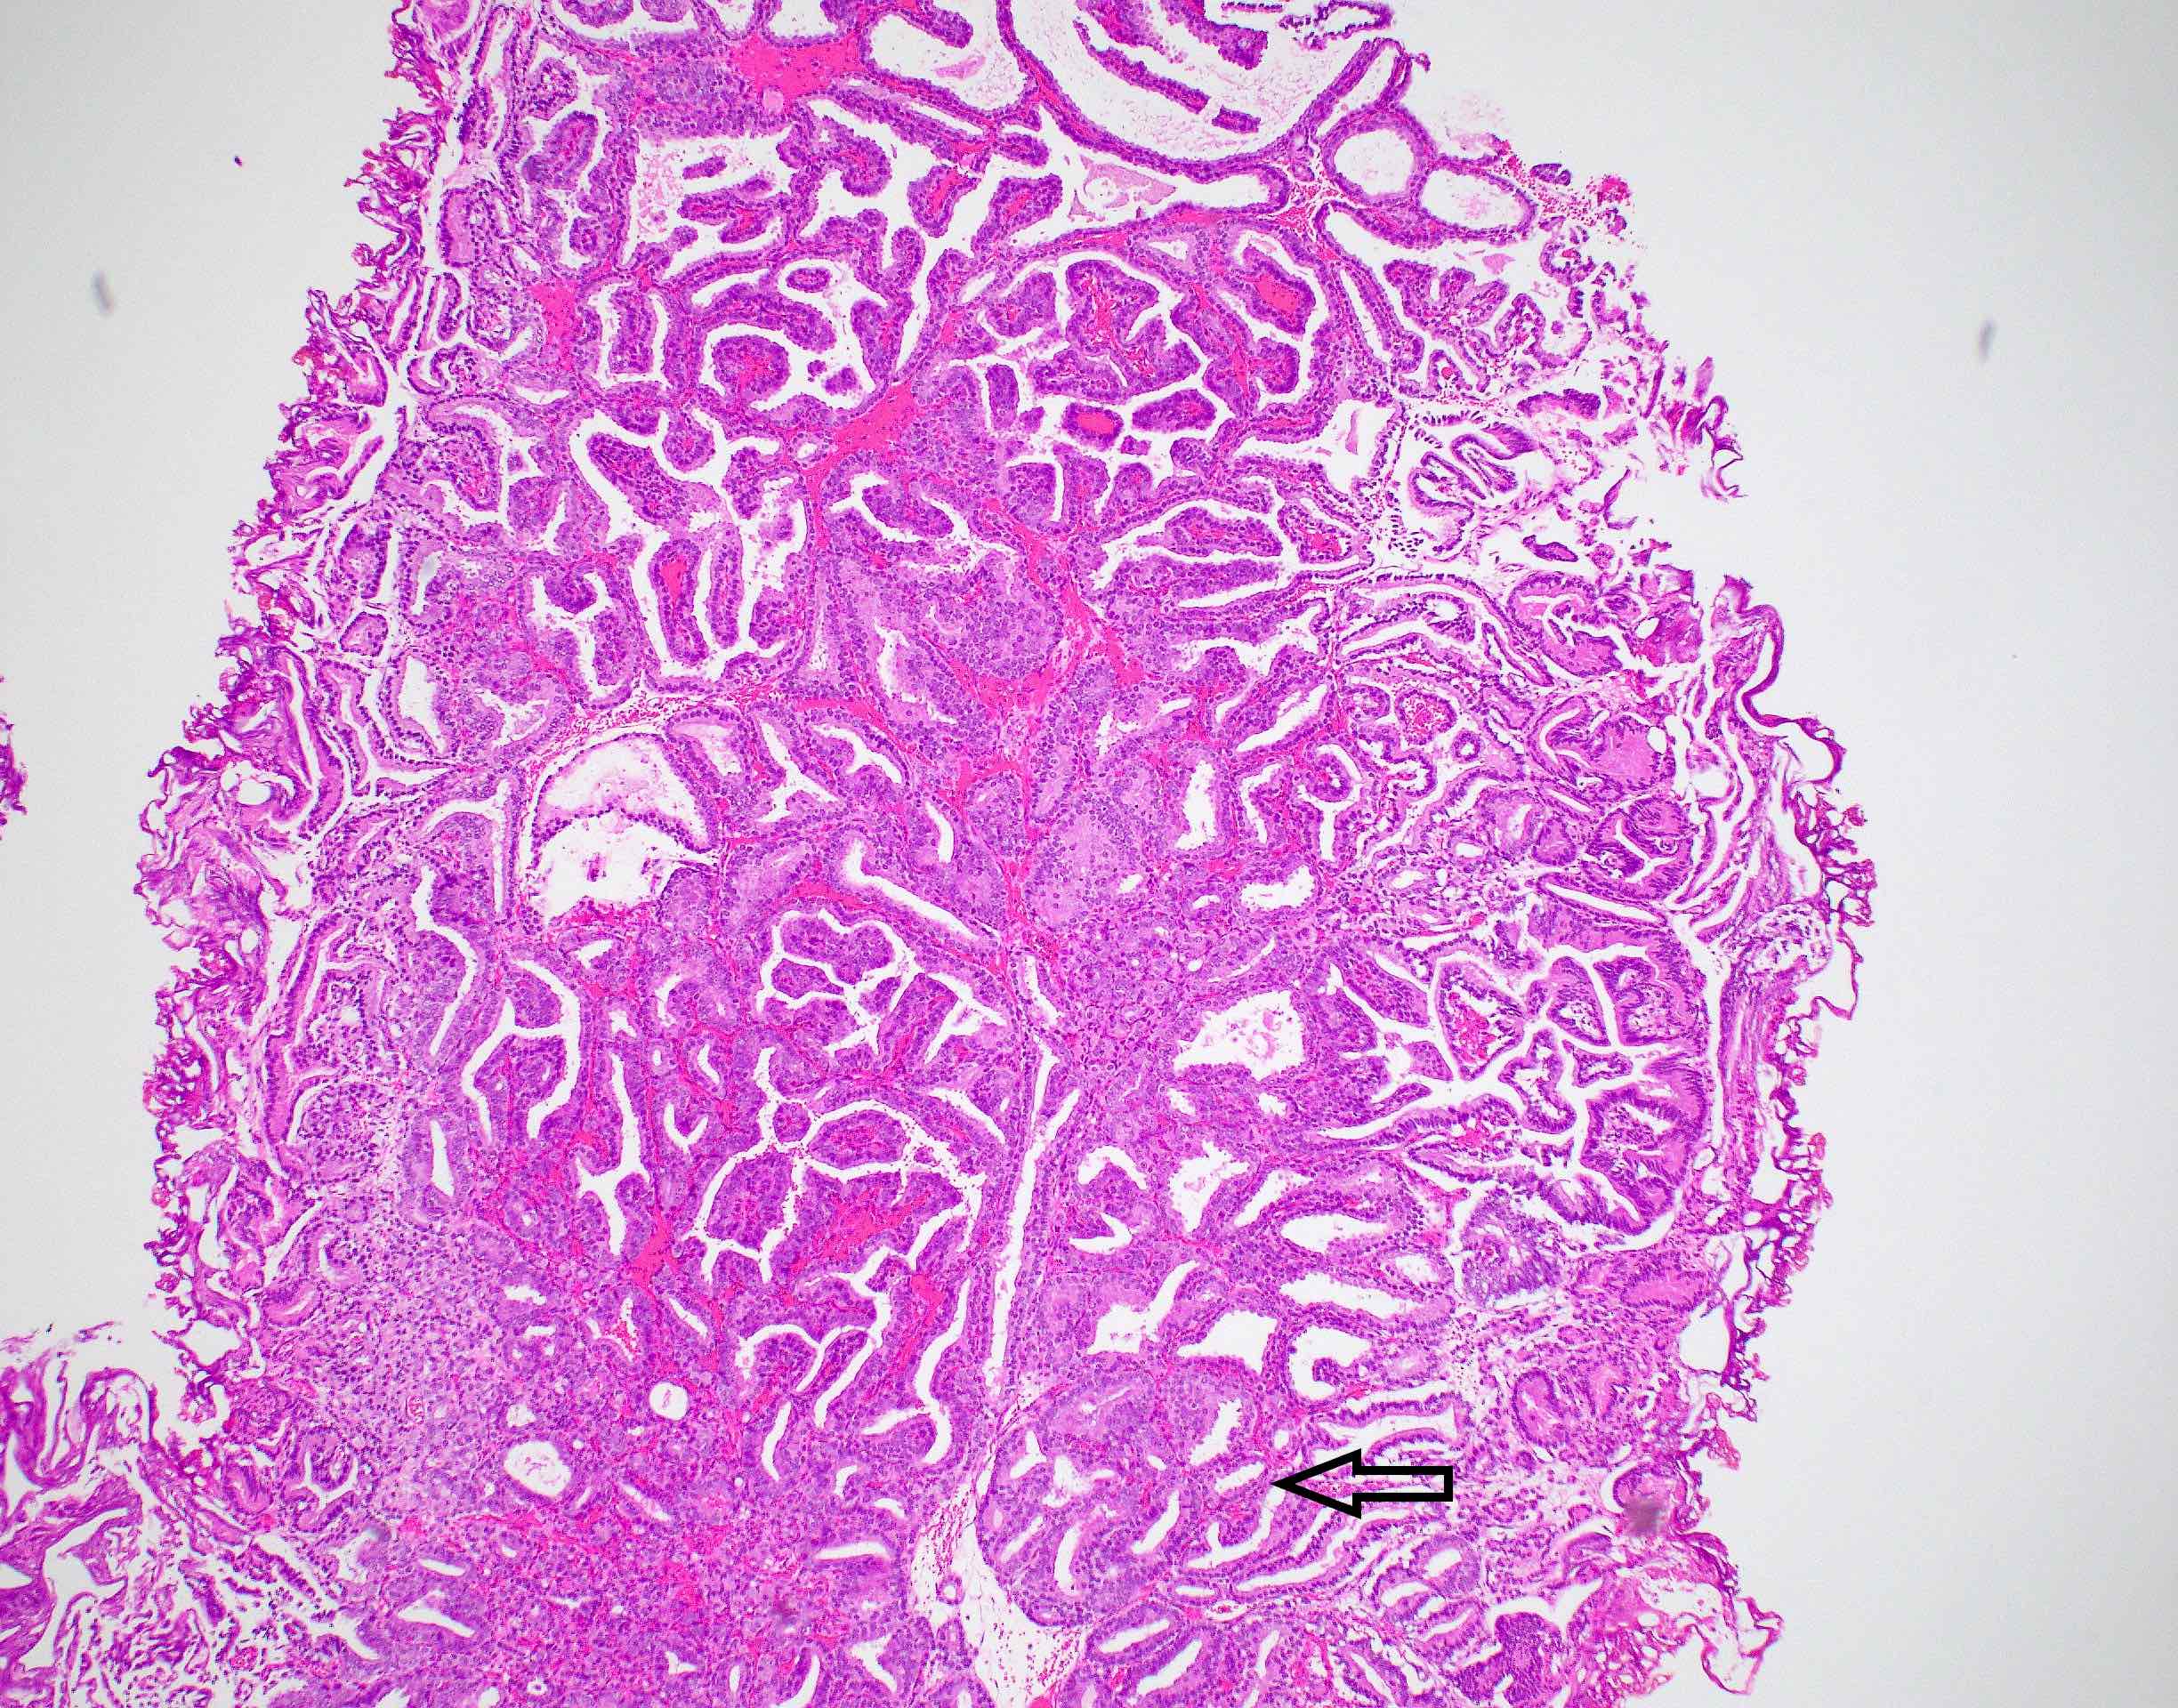 Papillary and cribriform pattern